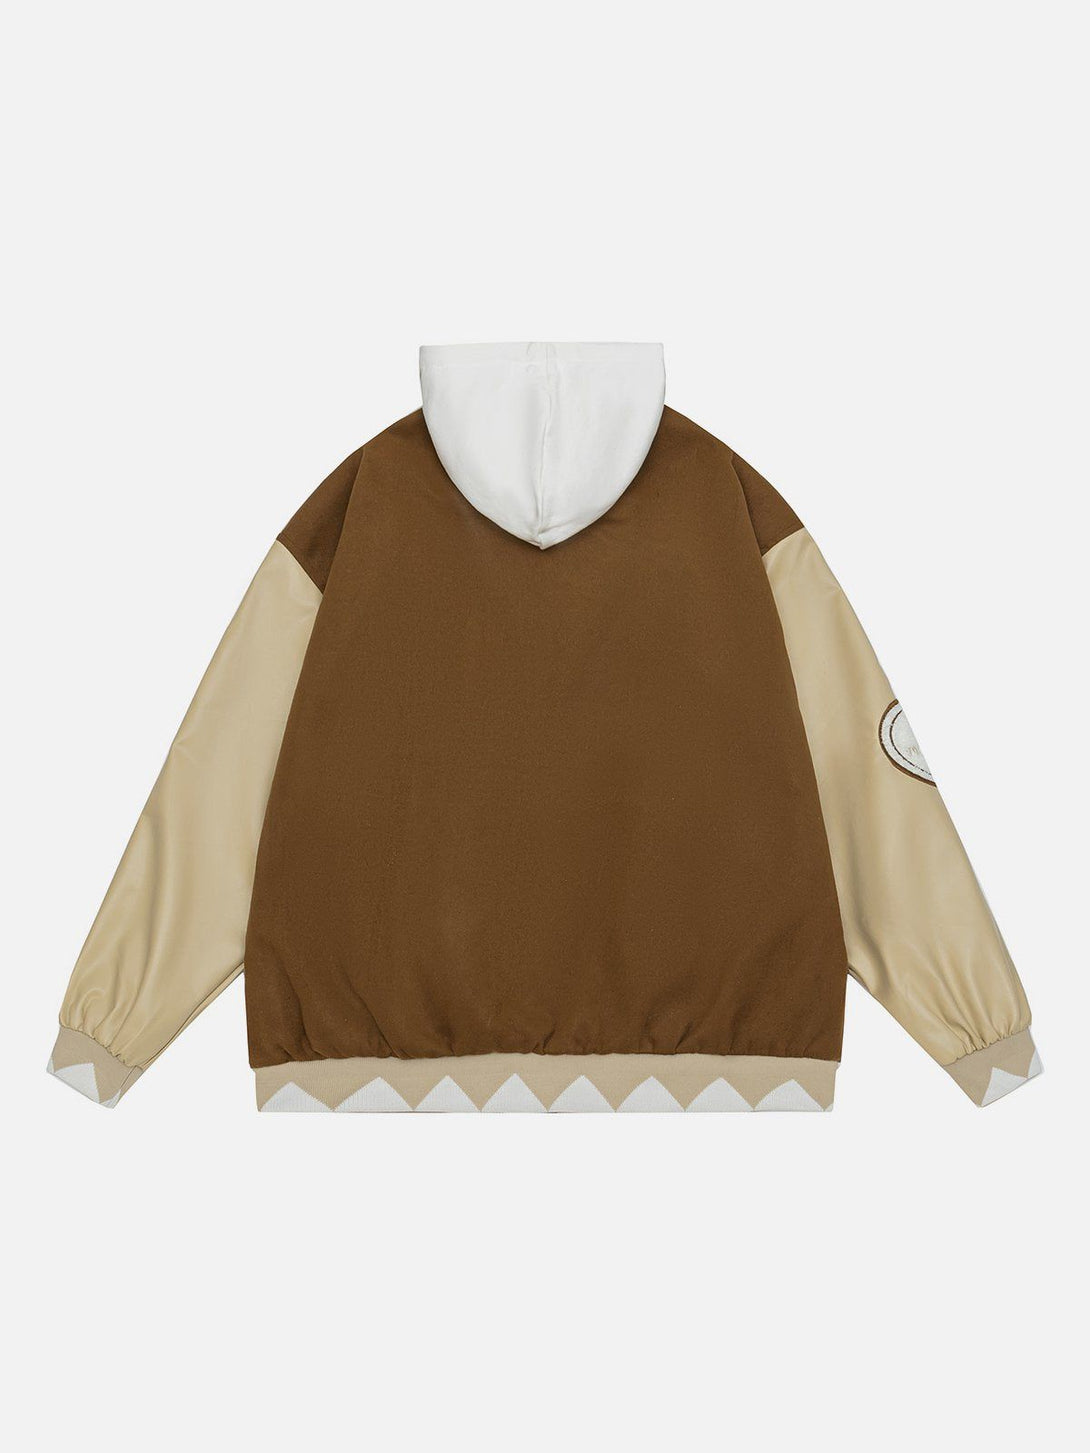 Levefly - Hooded PU Splicing Varsity Jacket - Streetwear Fashion - levefly.com